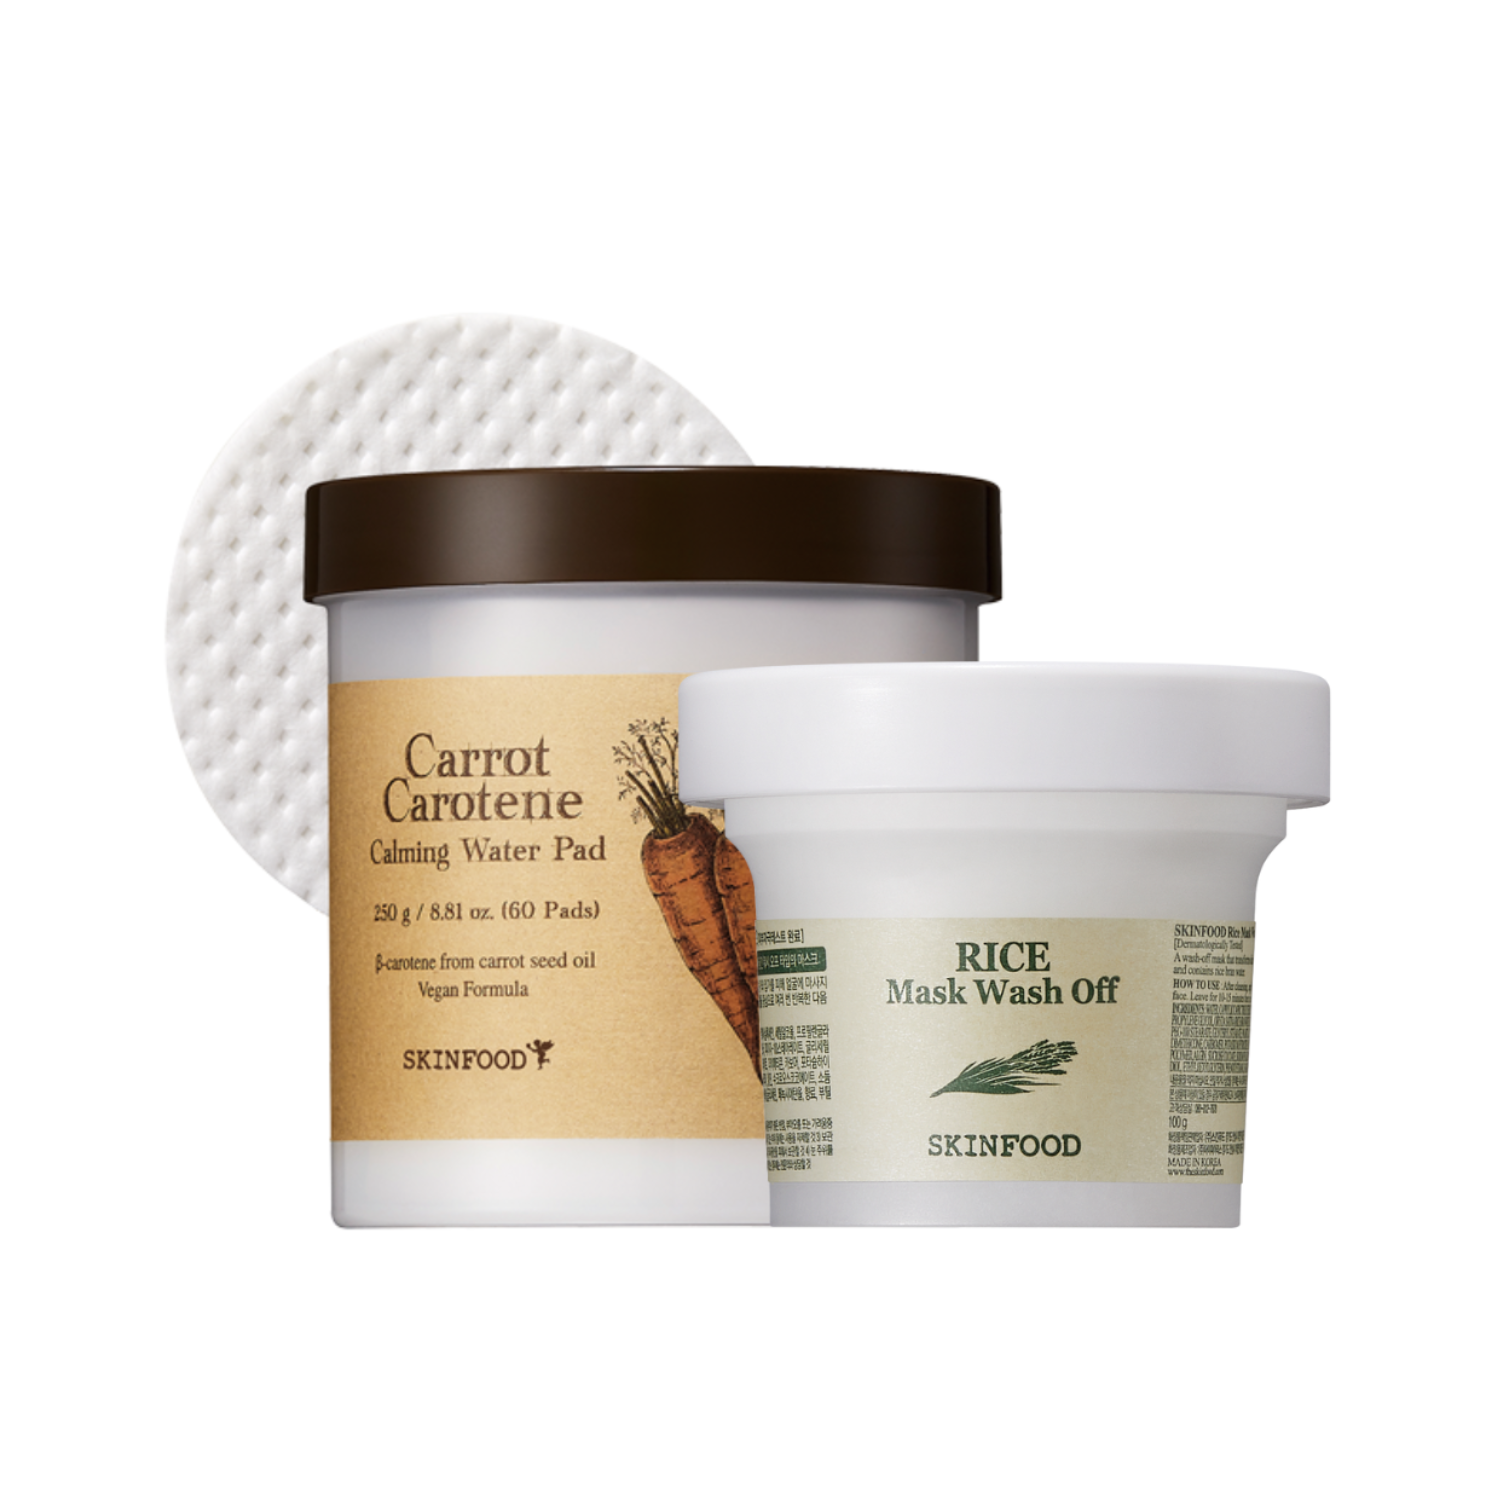 Carrot Carotene Calming Water Pad + Rice Mask Wash Off